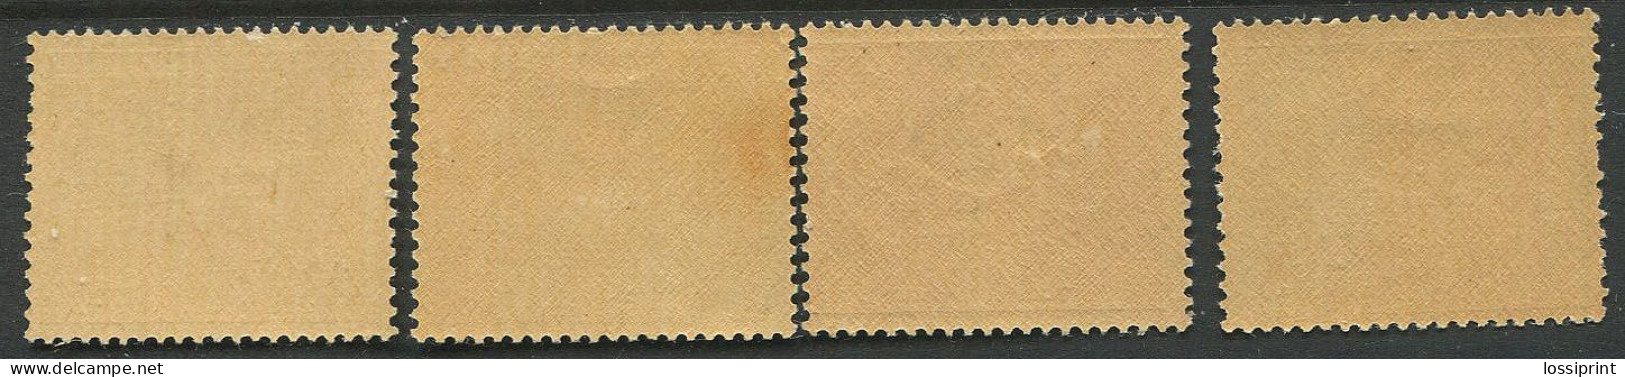 Estonia:Unused Stamps Serie Pigeons/airplanes, 1940, MNH - Estonia